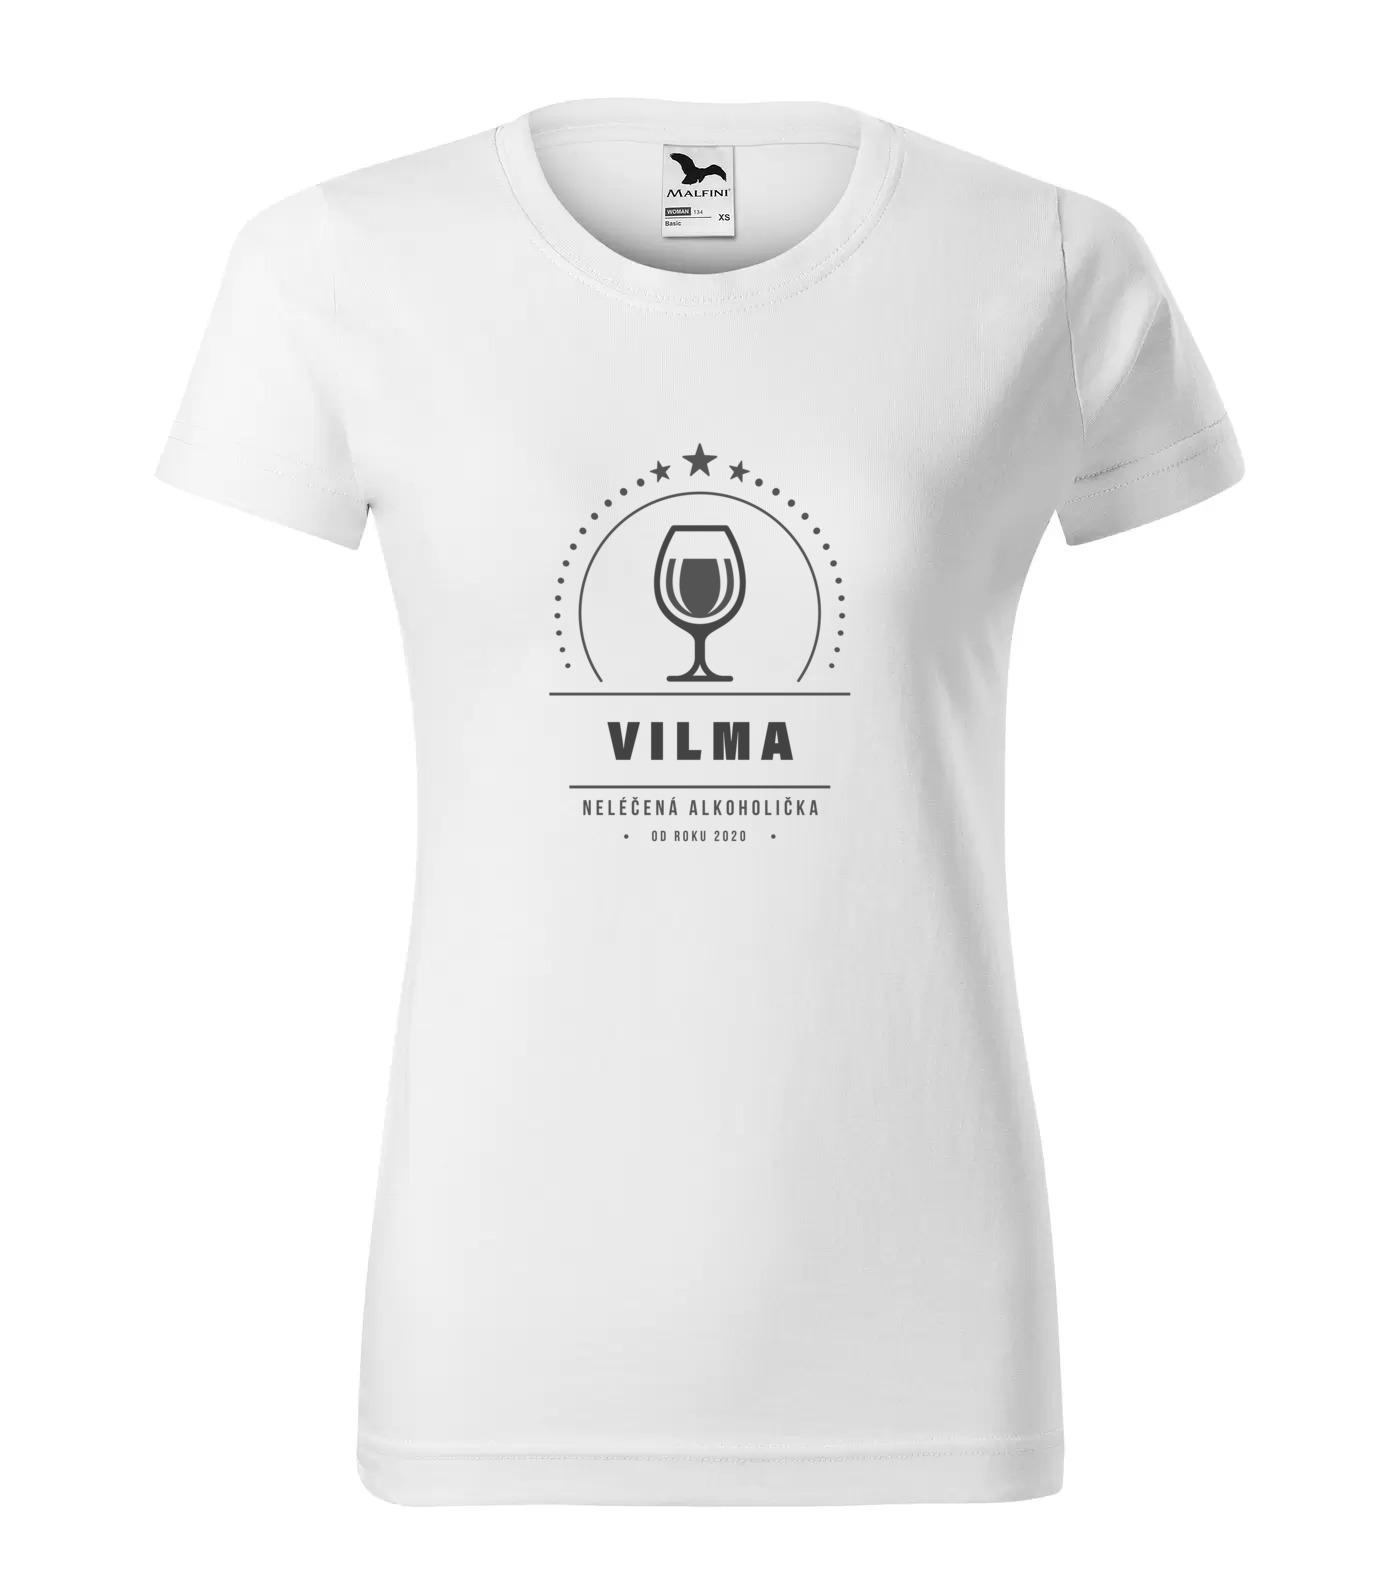 Tričko Alkoholička Vilma